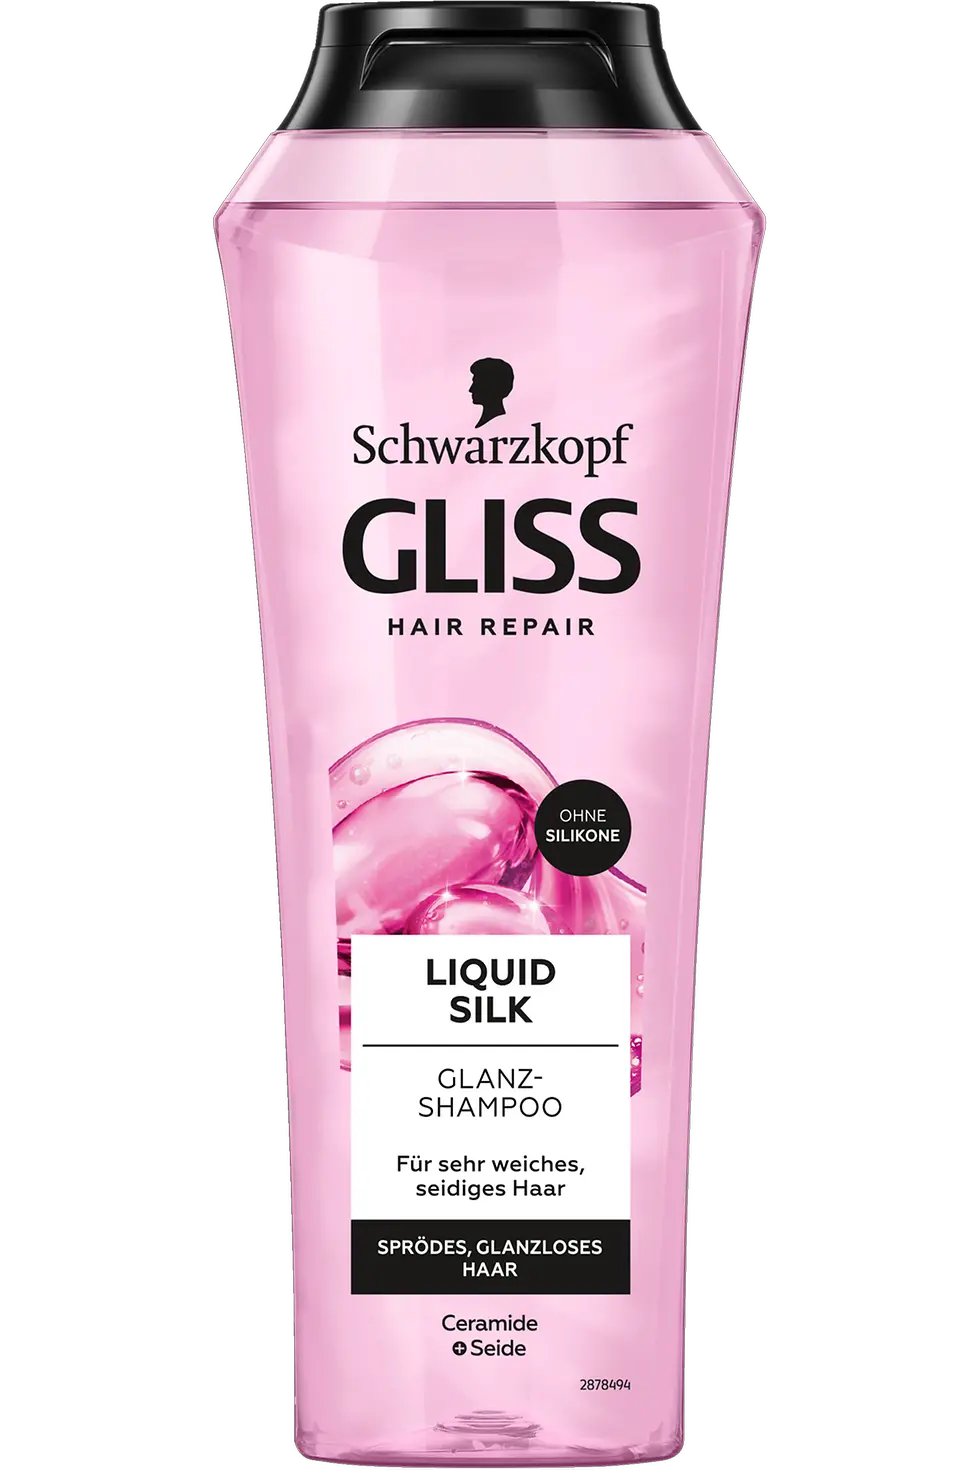 
Gliss Shampoo Liquid Silk